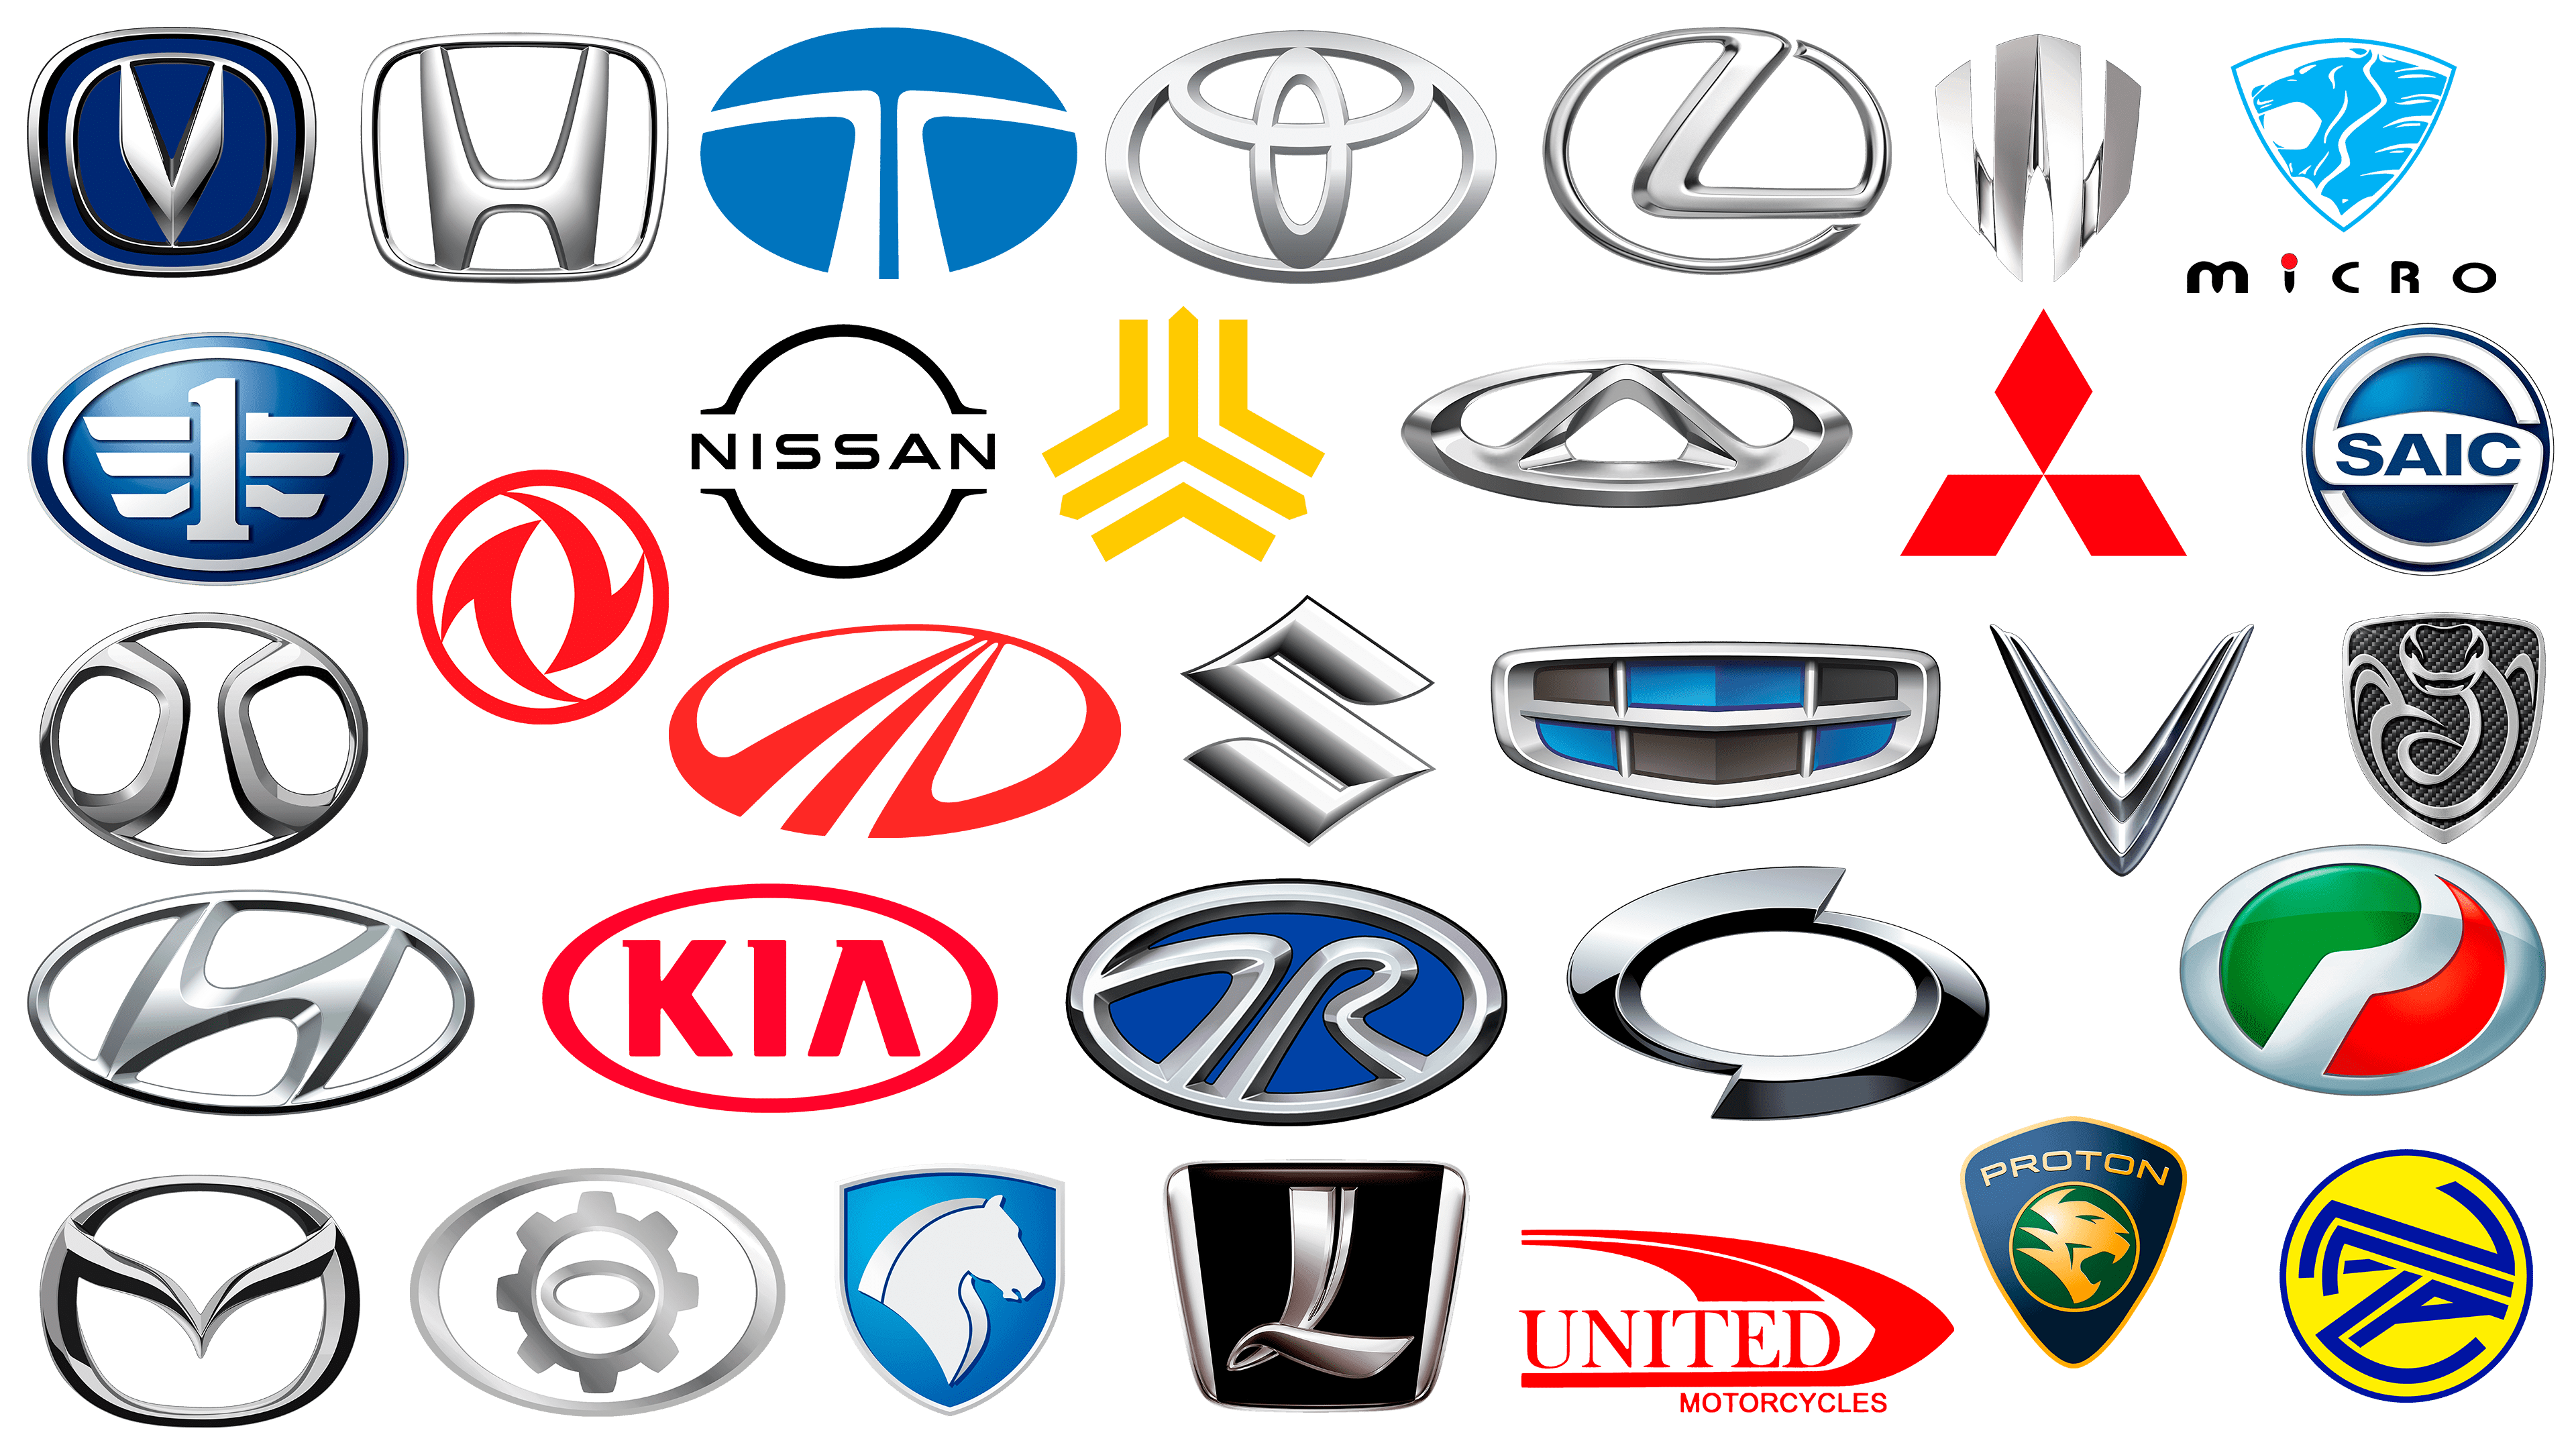 all car brands logos